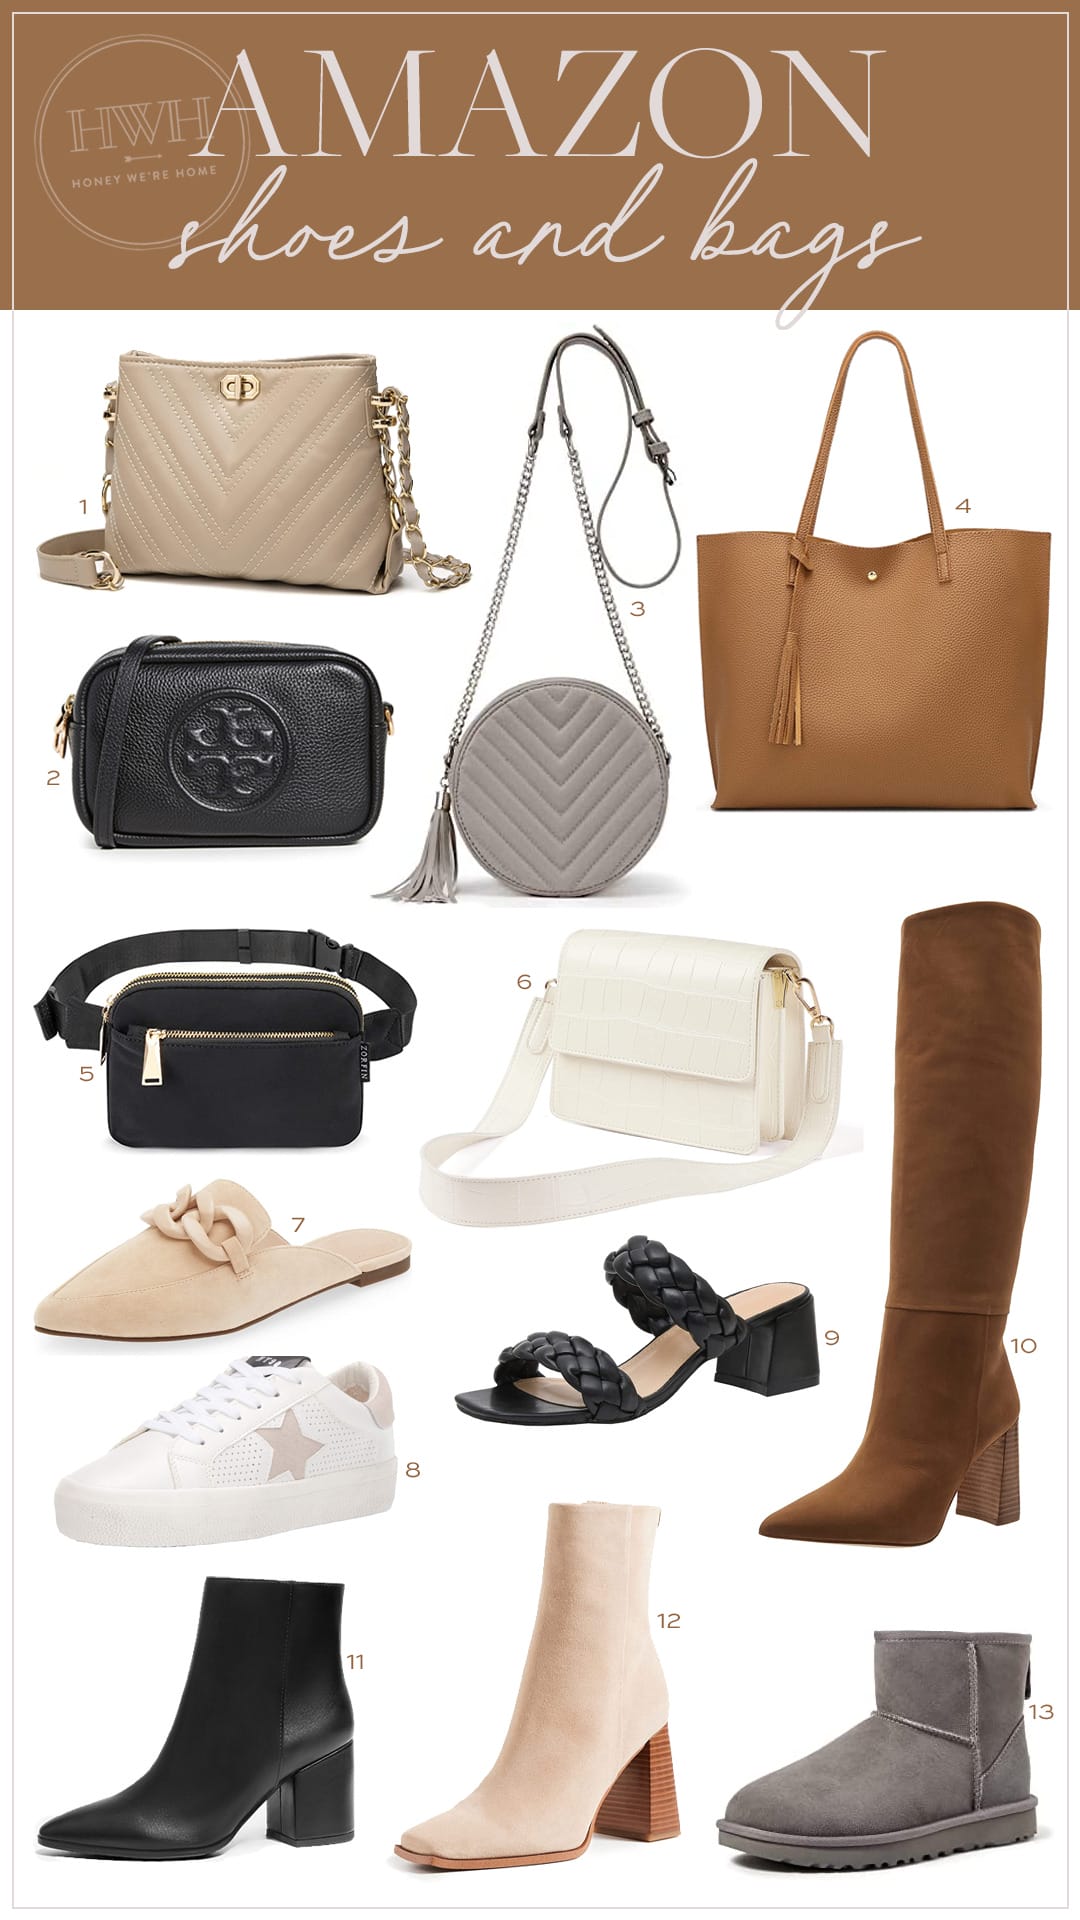 Amazon Shoes & Bags